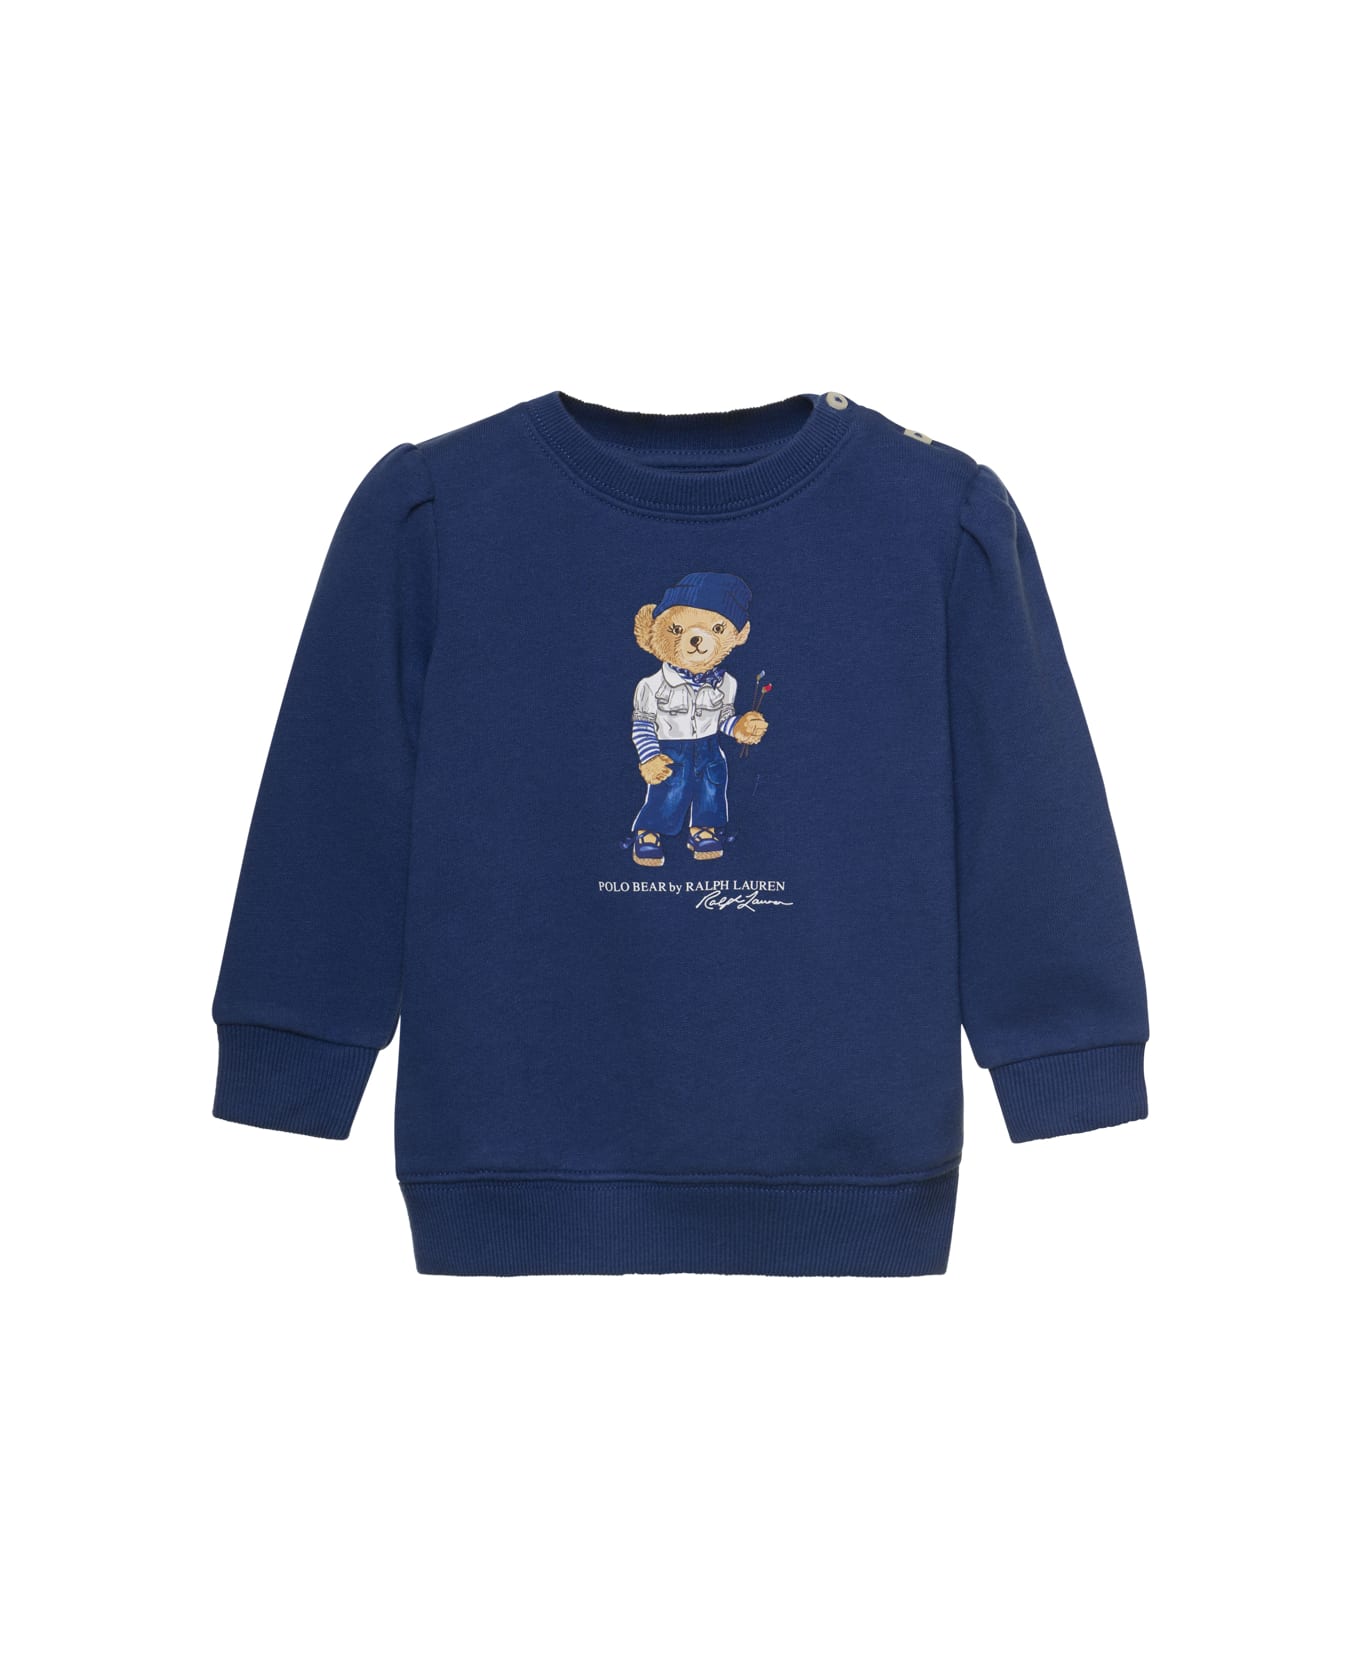 Polo Ralph Lauren Blue Crewneck Sweatshirt With Teddy Bear Print In Cotton Blend Baby - Blu